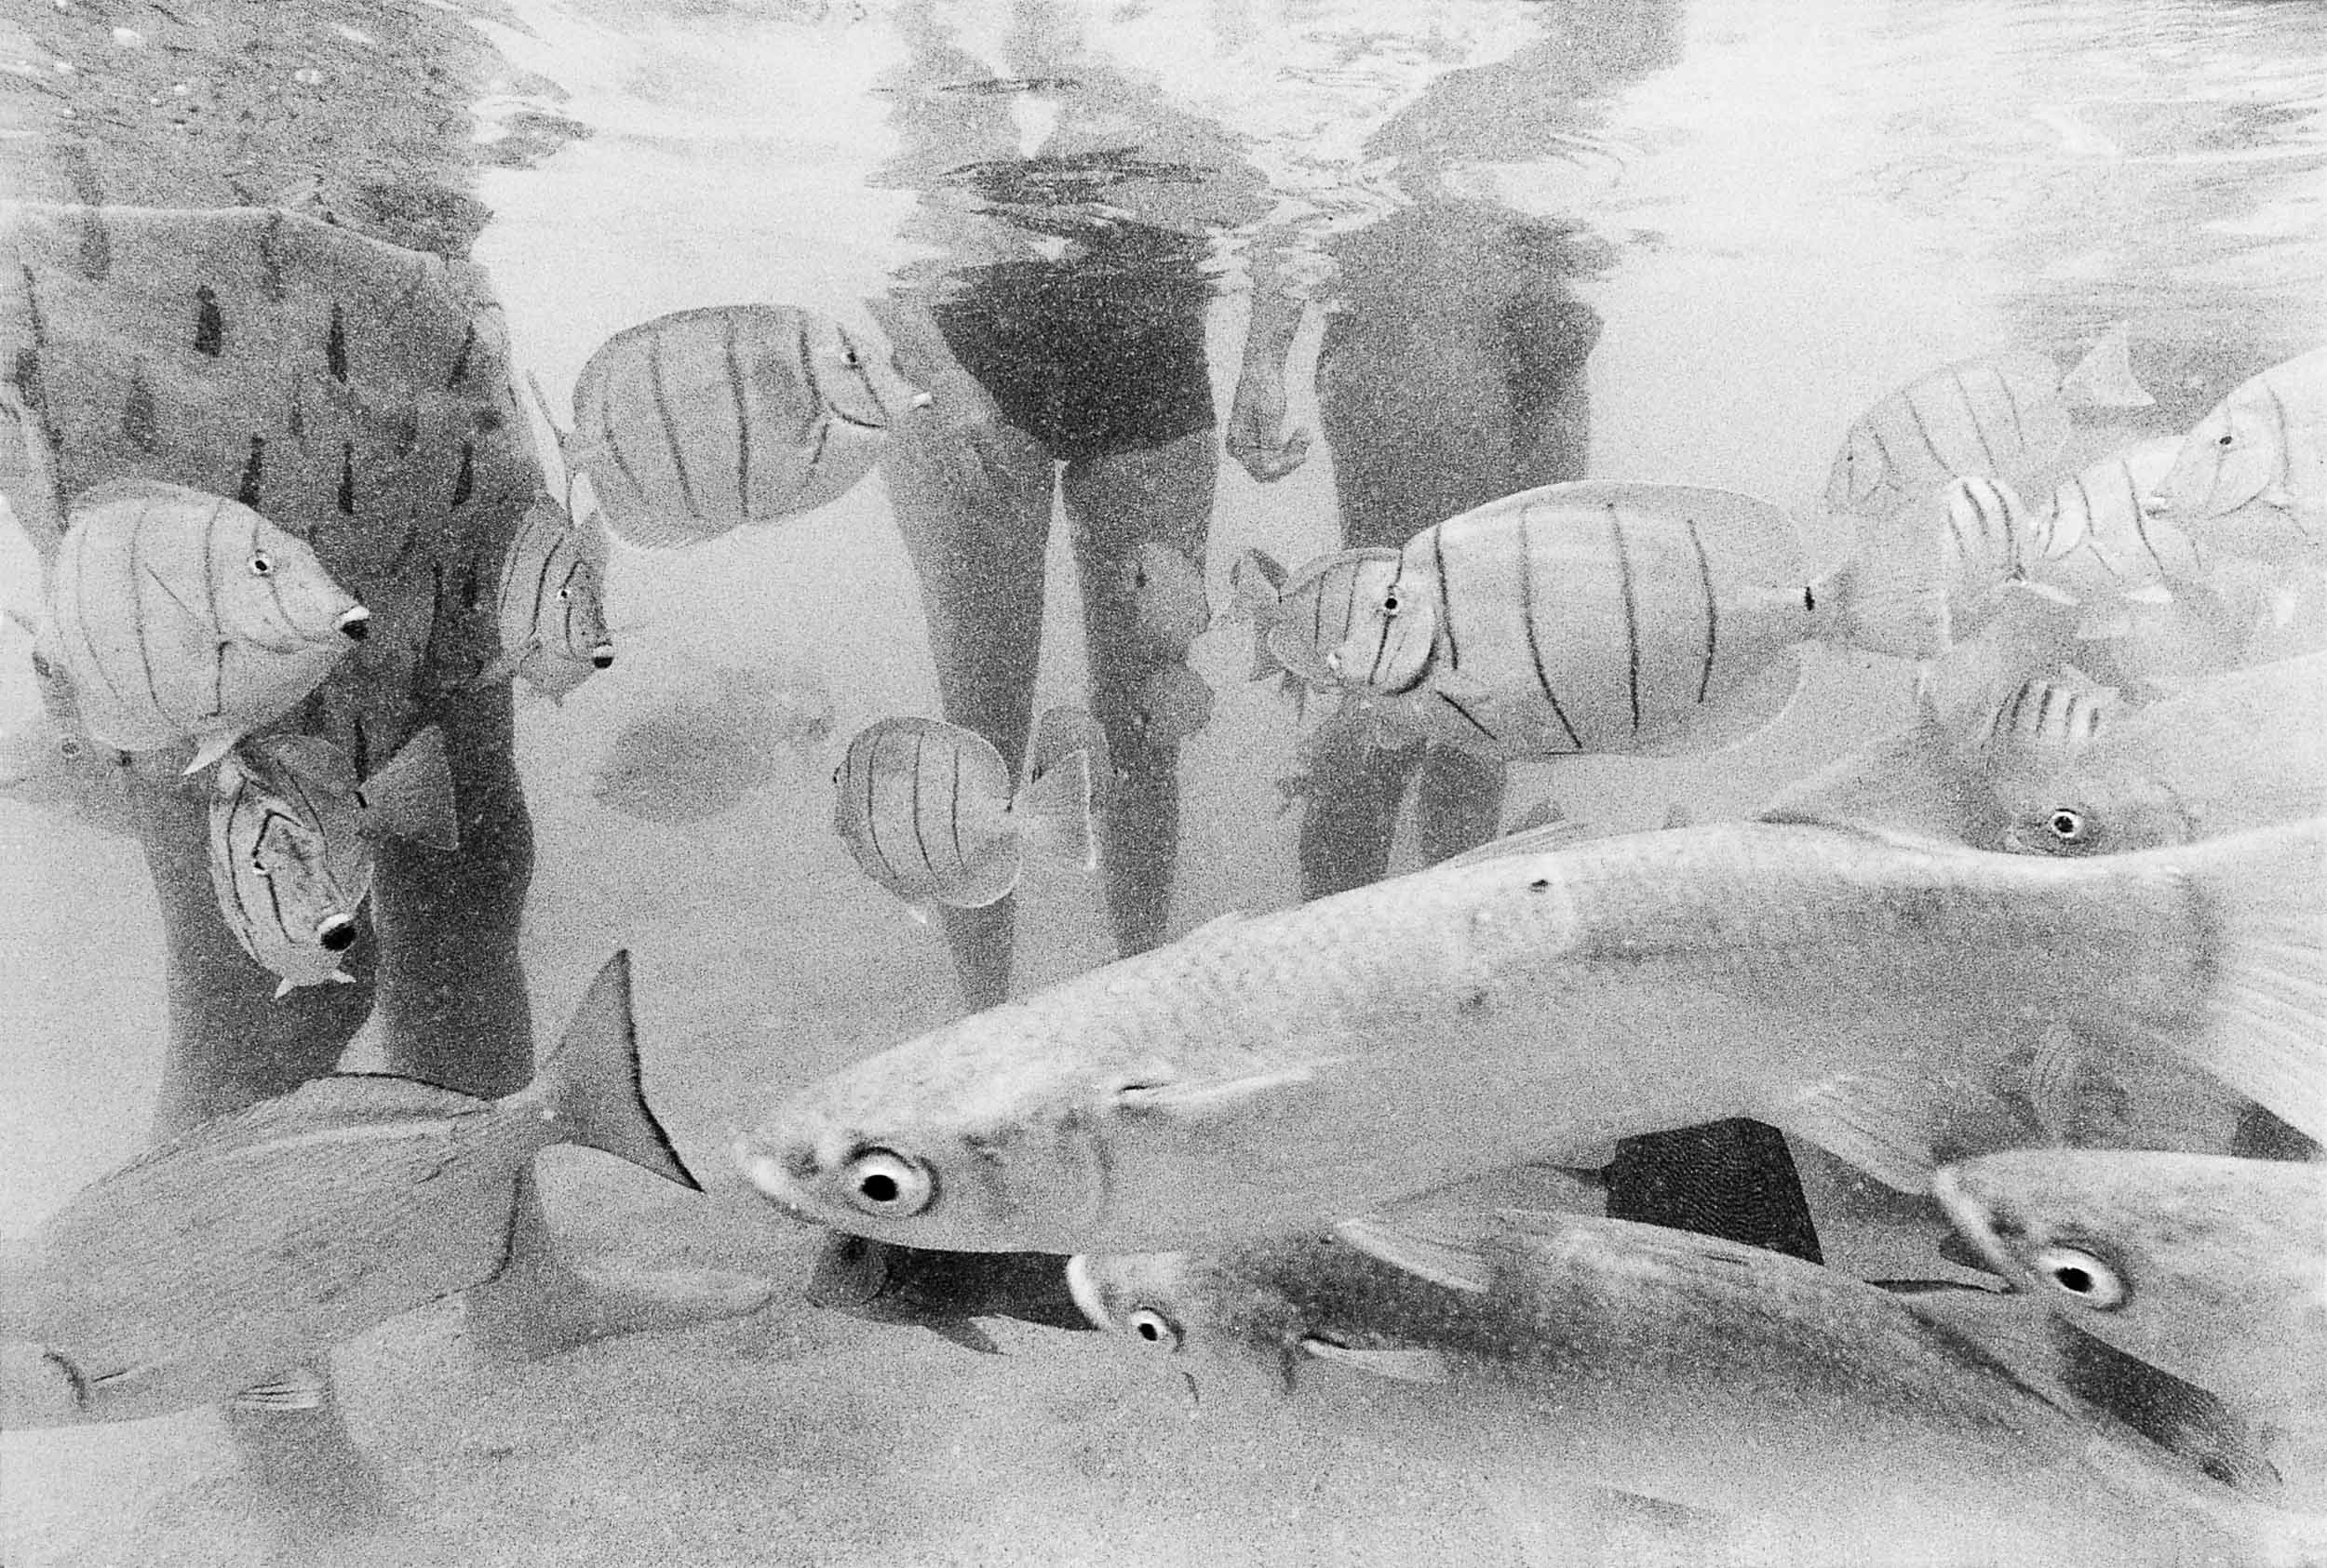 Barbara Alper- photo of big fish swimming with people watching at Hanauma Bay, Oahu Hawaii